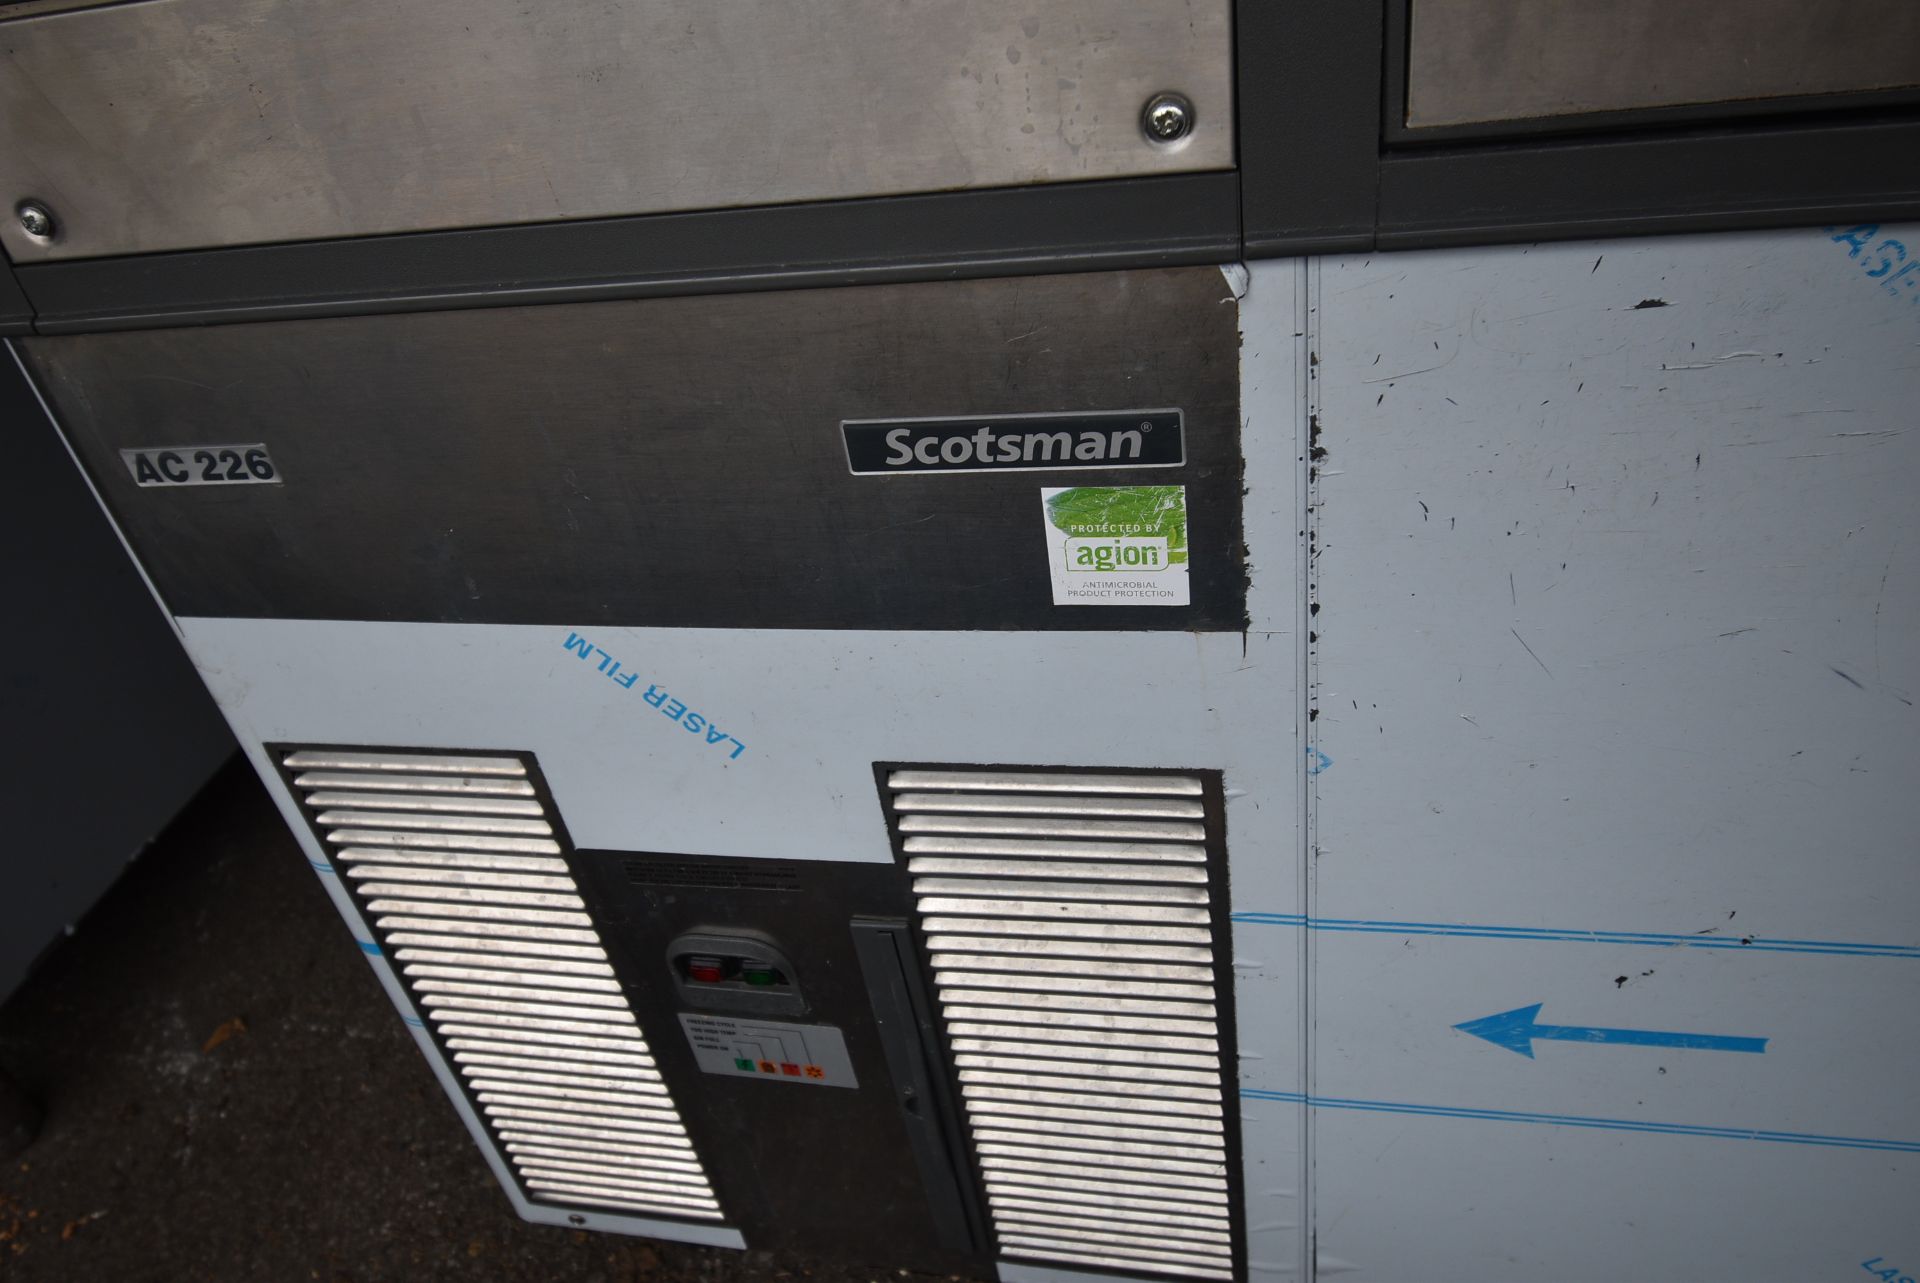 Scotsman AC226 Ice Machine - Image 3 of 3